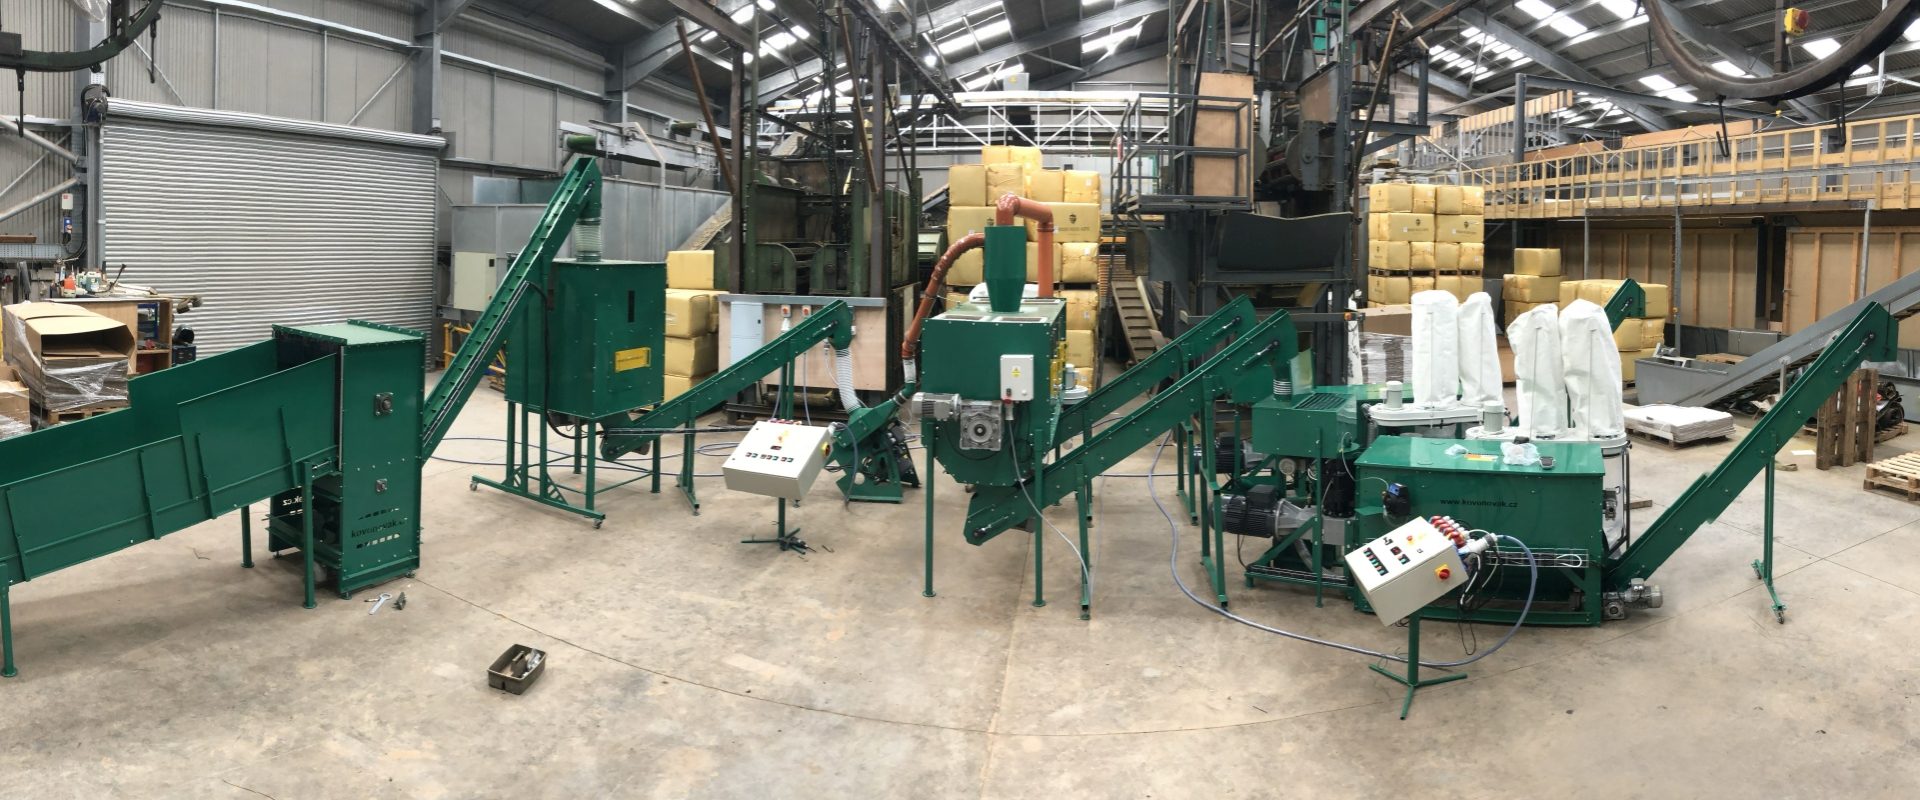 PTO-Driven Wood Pellet Mill, Tractor Biomass Pellet Machine